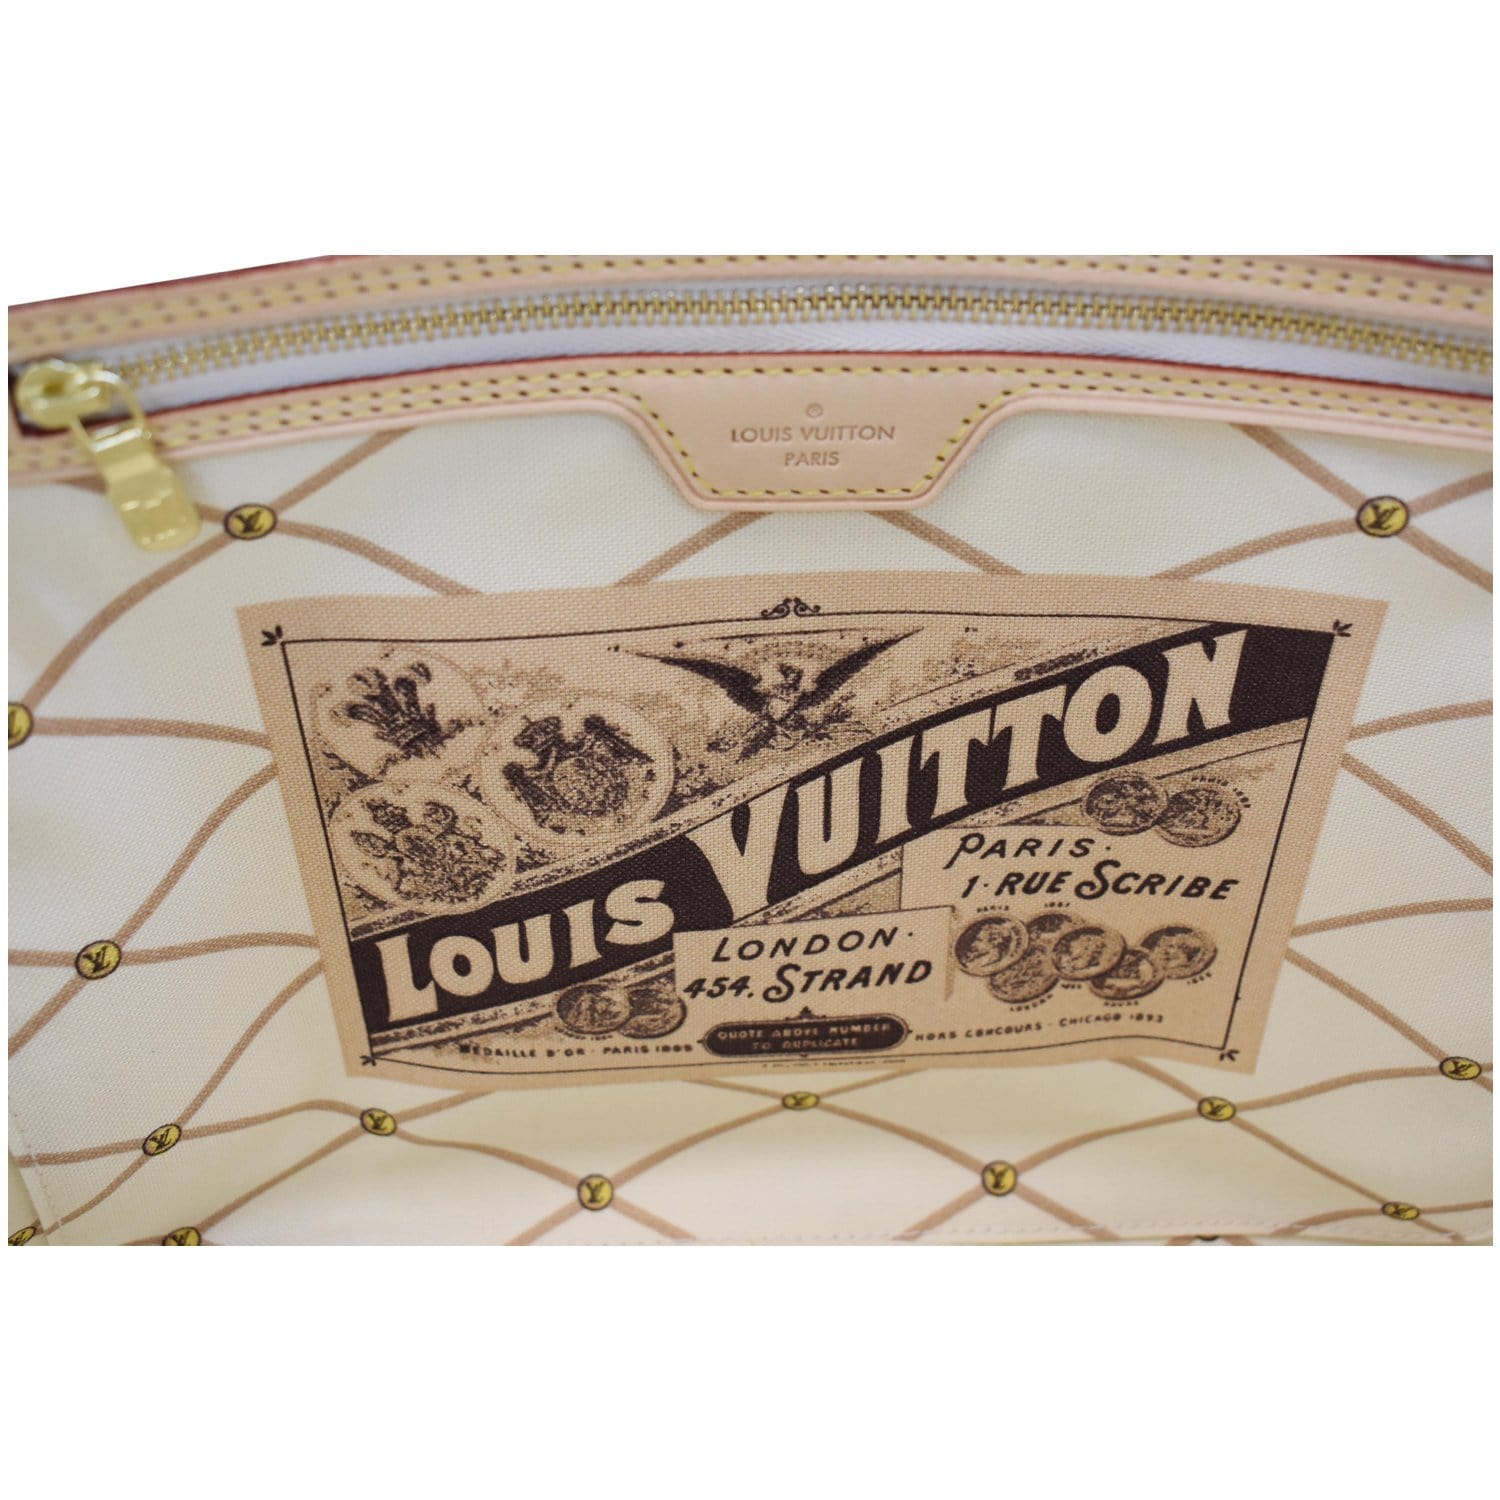 Louis Vuitton Neverfull Summer Trunks Collection 2018 - Handbagholic